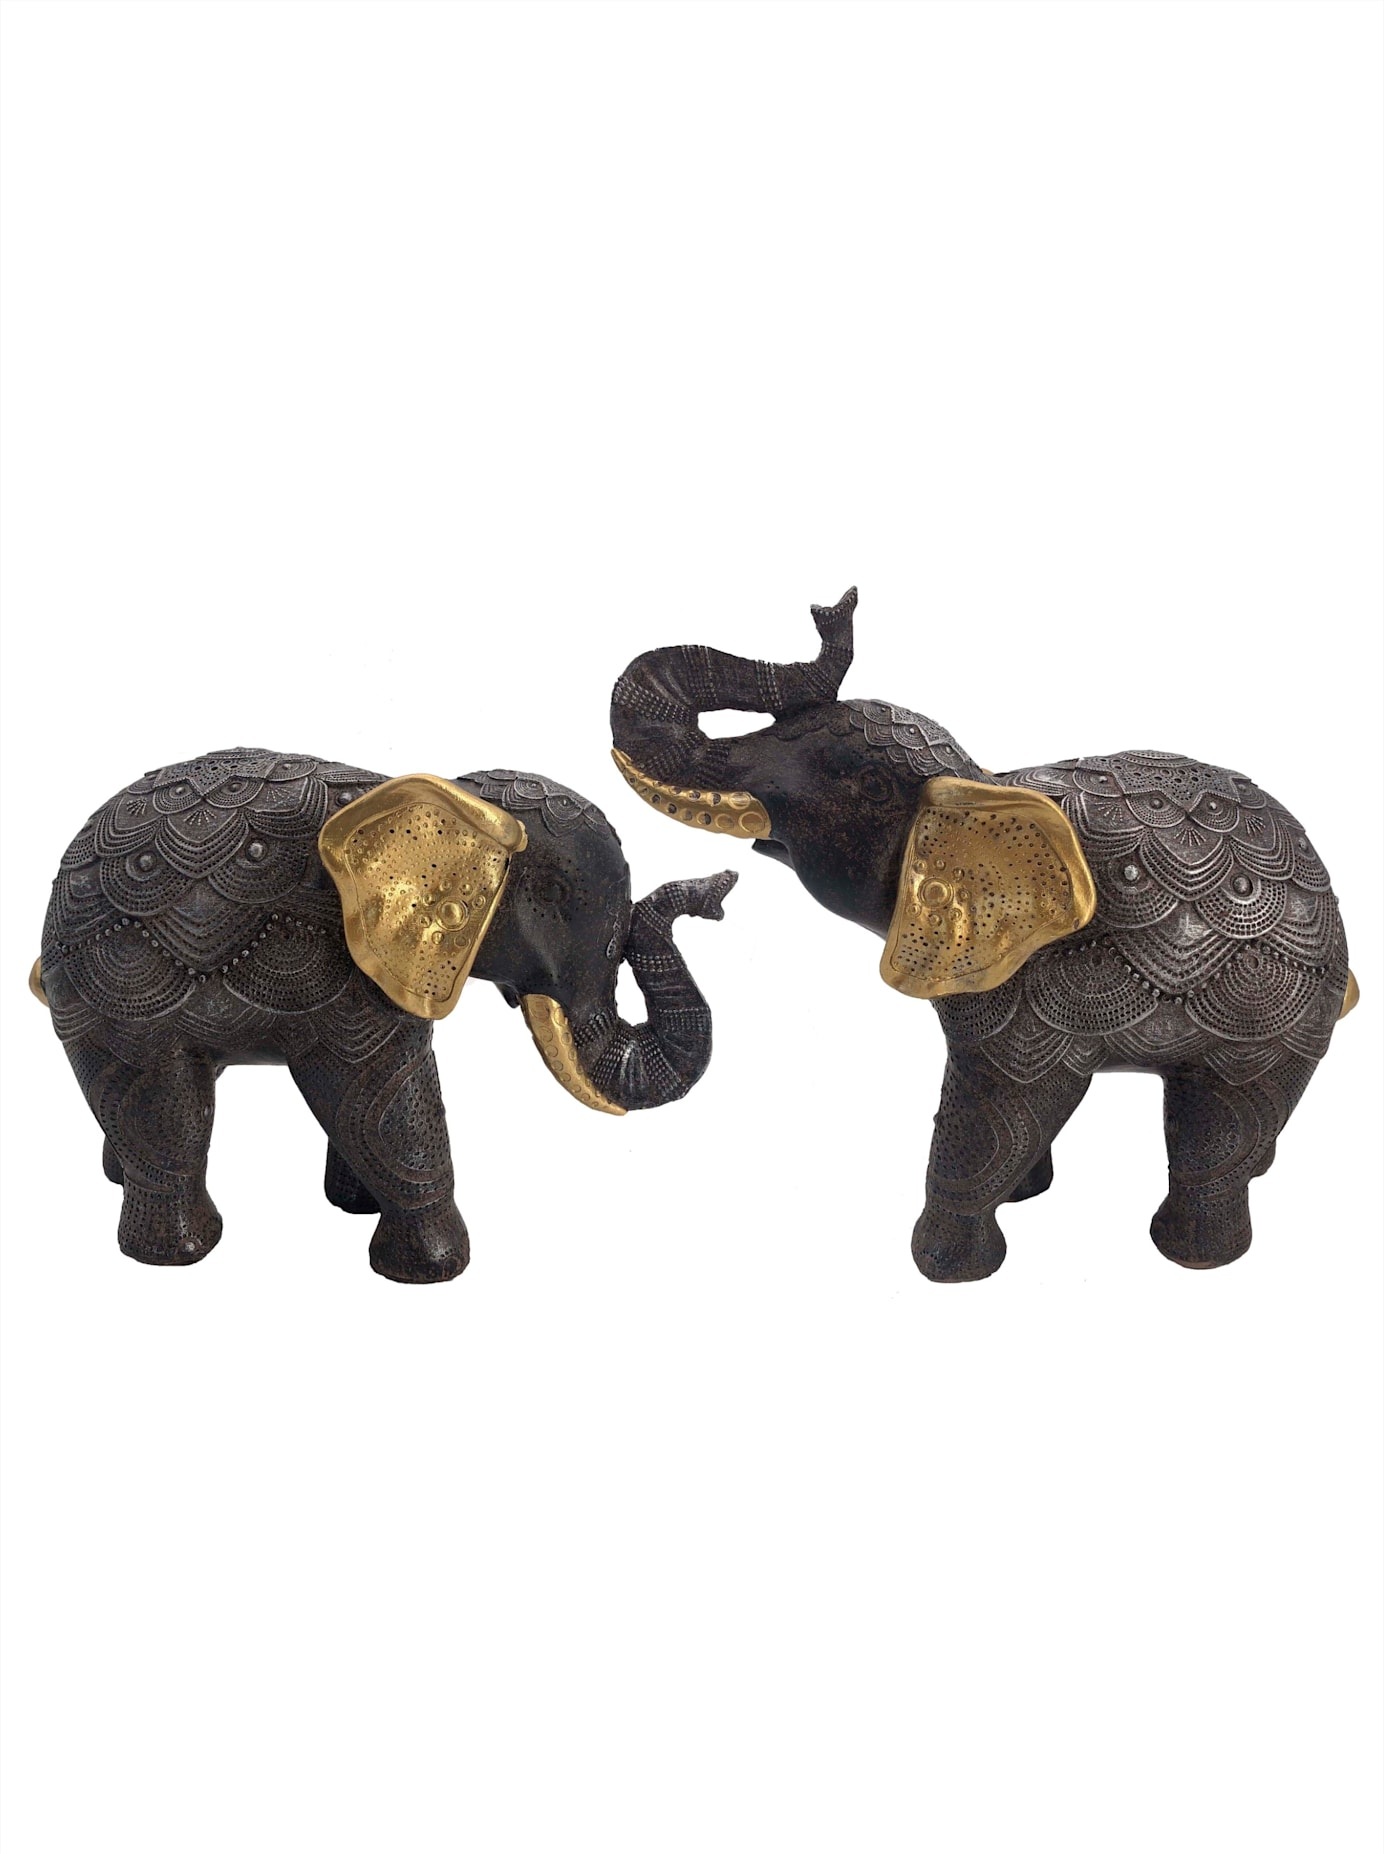 heine home Deko-Figur Elefant, 2 tlg. Set | BAUR | Tierfiguren